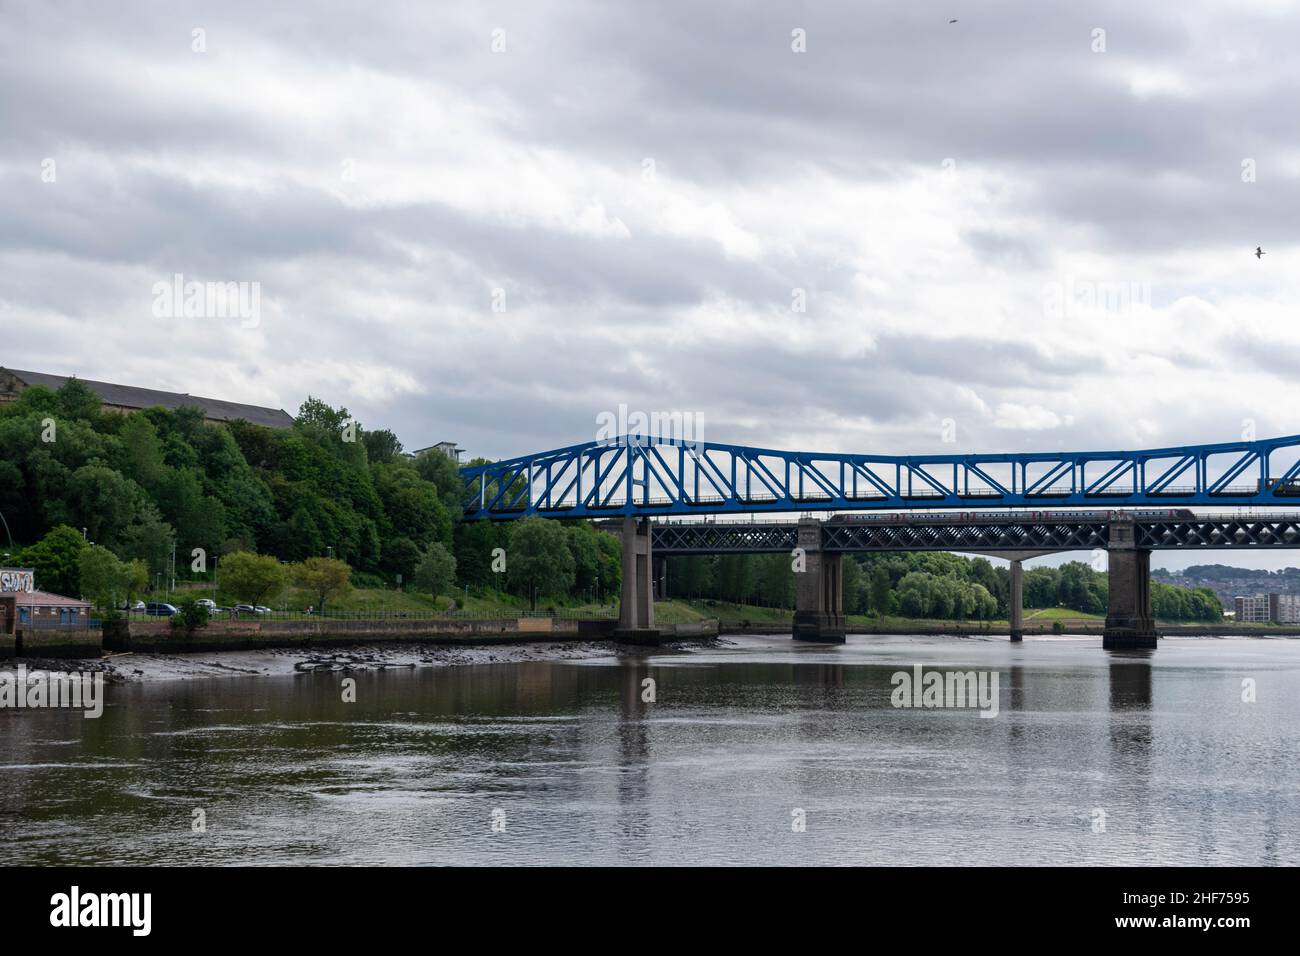 Newcastle, UK - 7 maggio 2019: Famosi ponti che collegano Newcastle e Gateshead sul fiume Tyne, Tyne Bridge, High Level Bridge, Swing Bridge, King Foto Stock